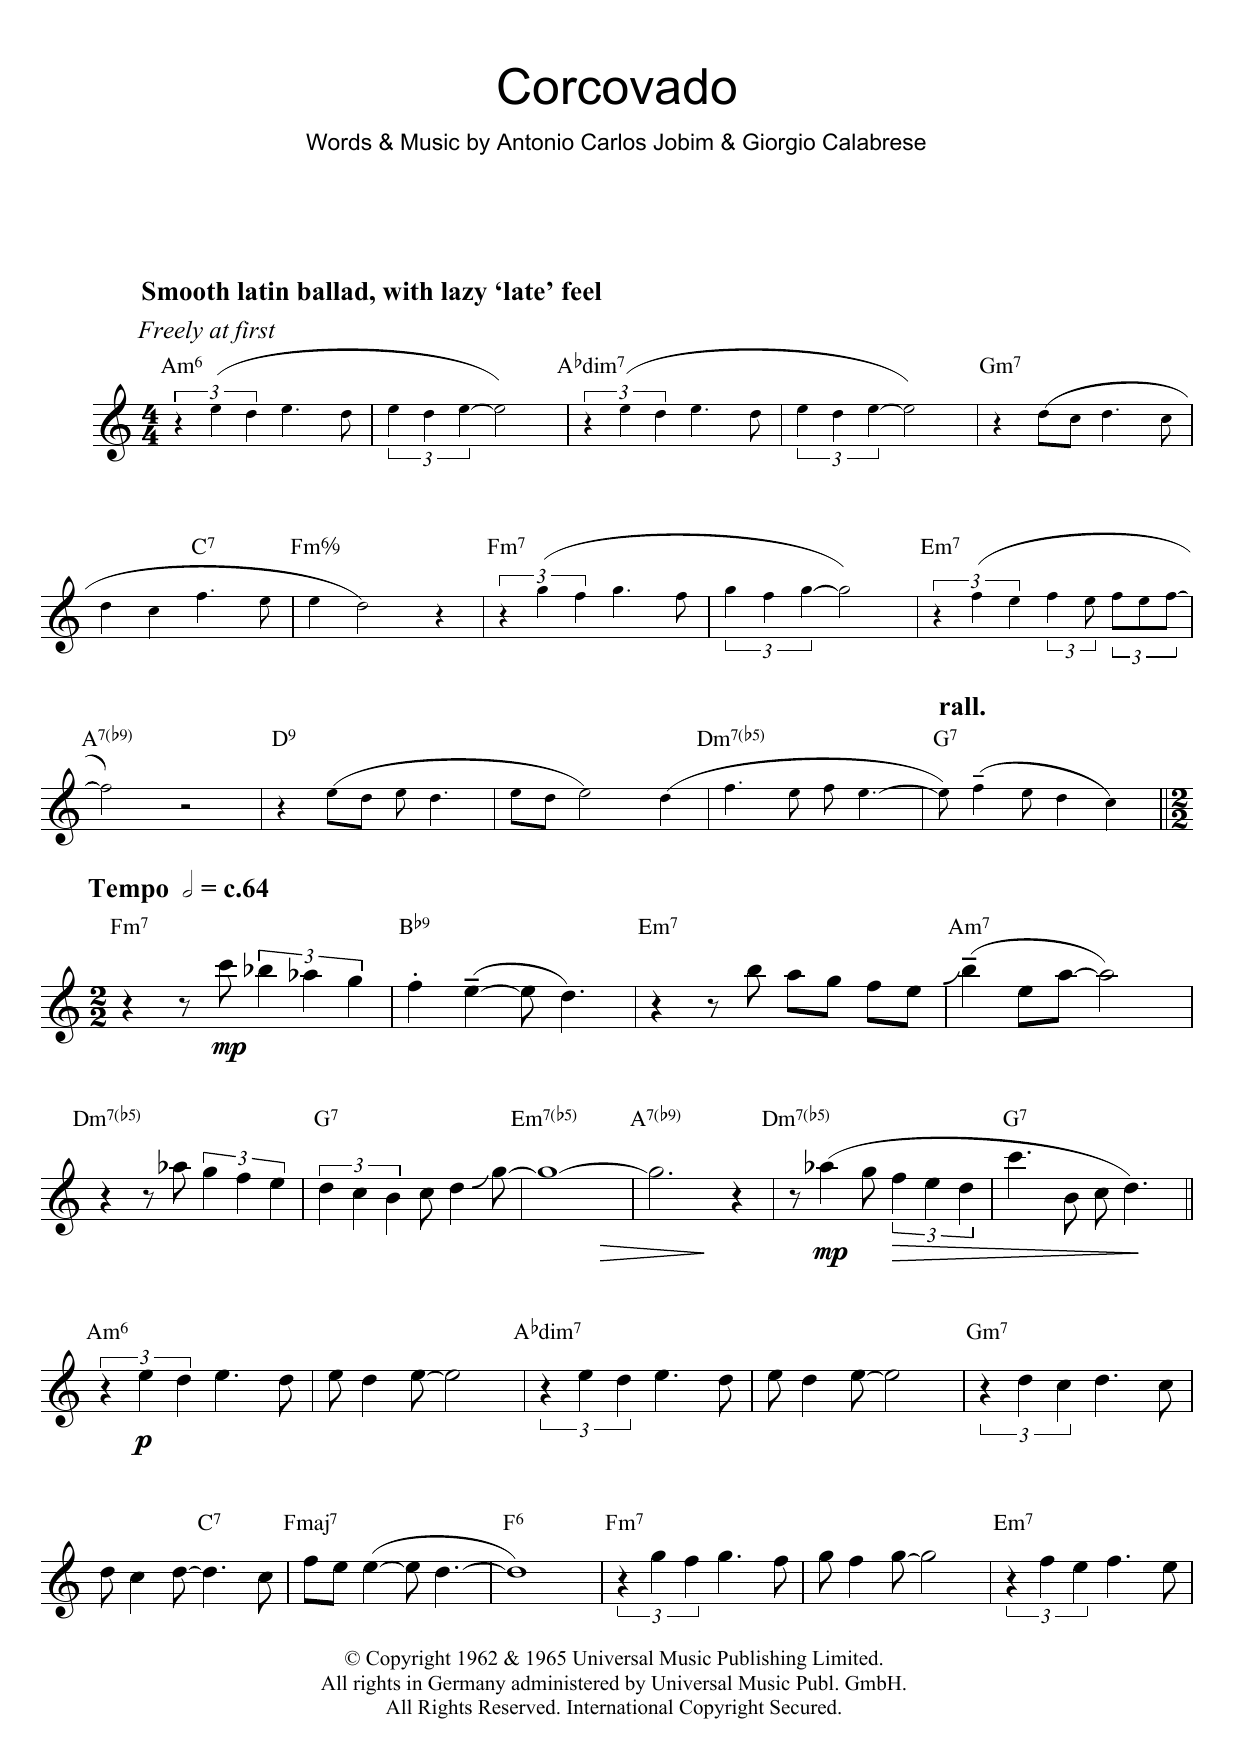 Antonio Carlos Jobim Corcovado (Quiet Nights Of Quiet Stars) Sheet Music Notes & Chords for Trumpet - Download or Print PDF